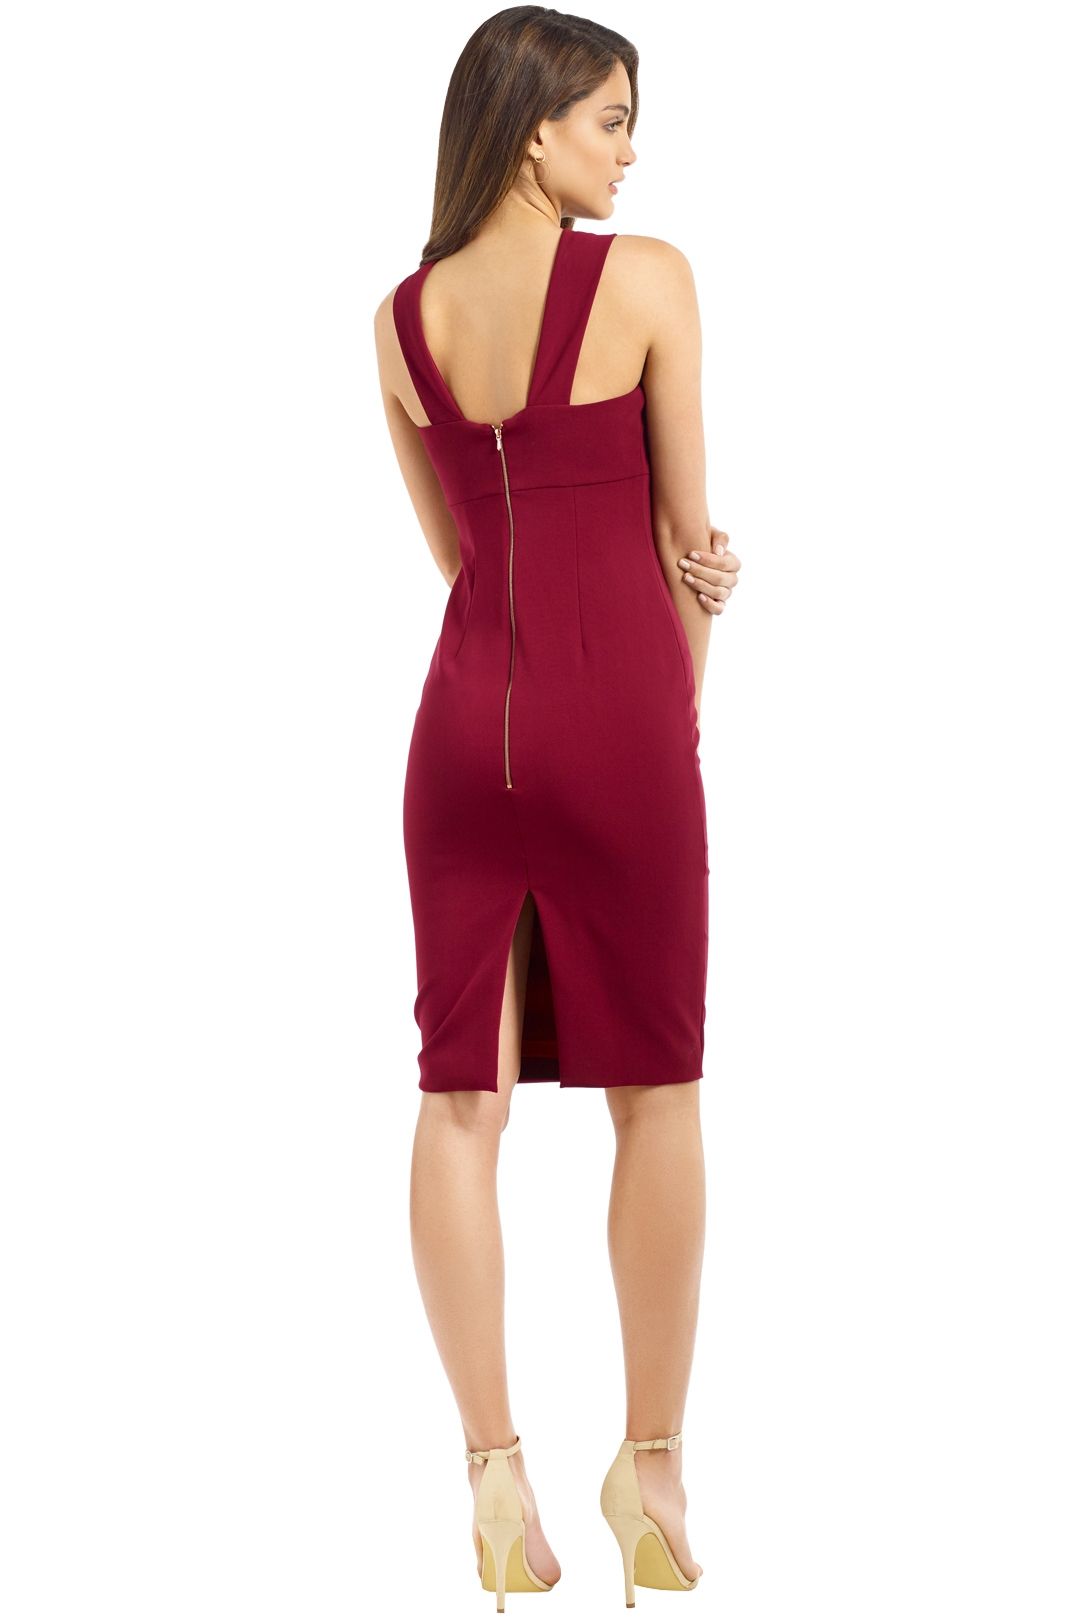 Unspoken - knot Knee Length Dress - Burgundy - Back